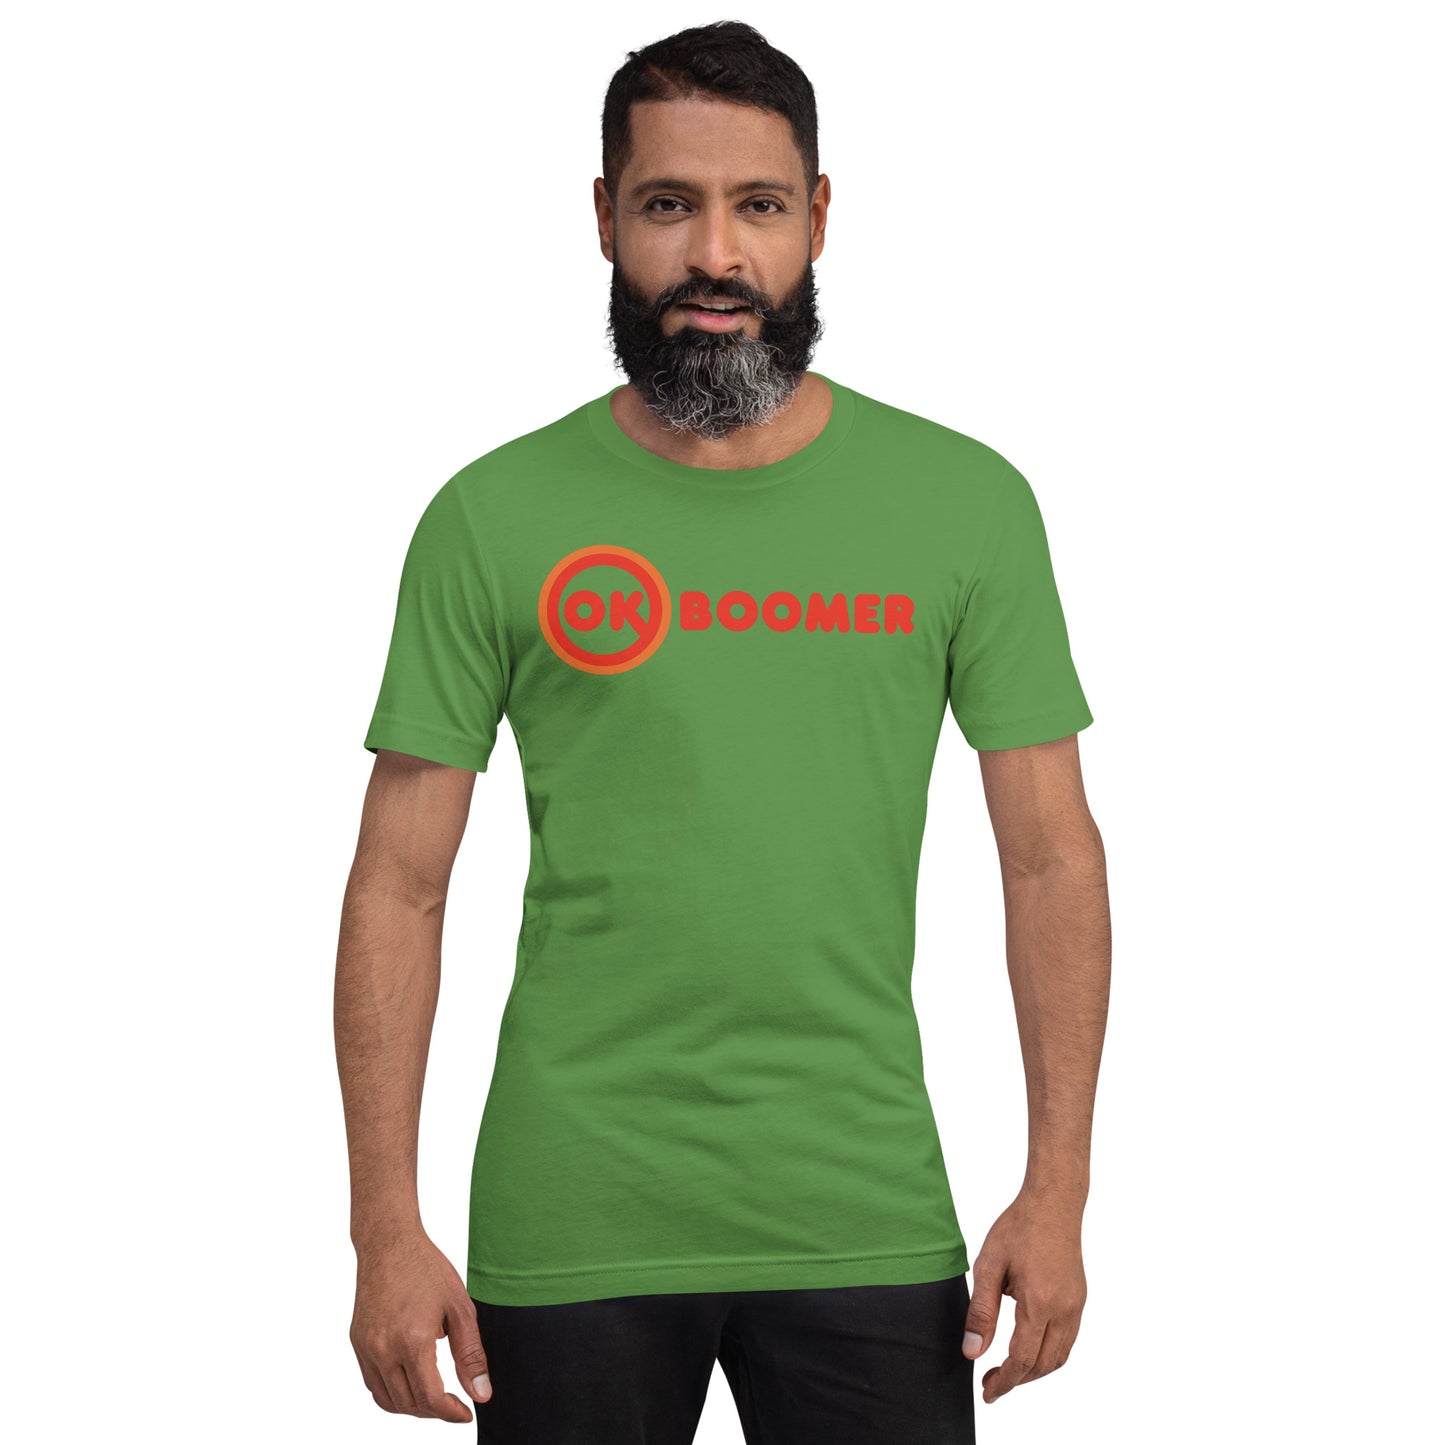 Circle-OK Boomer t-shirt